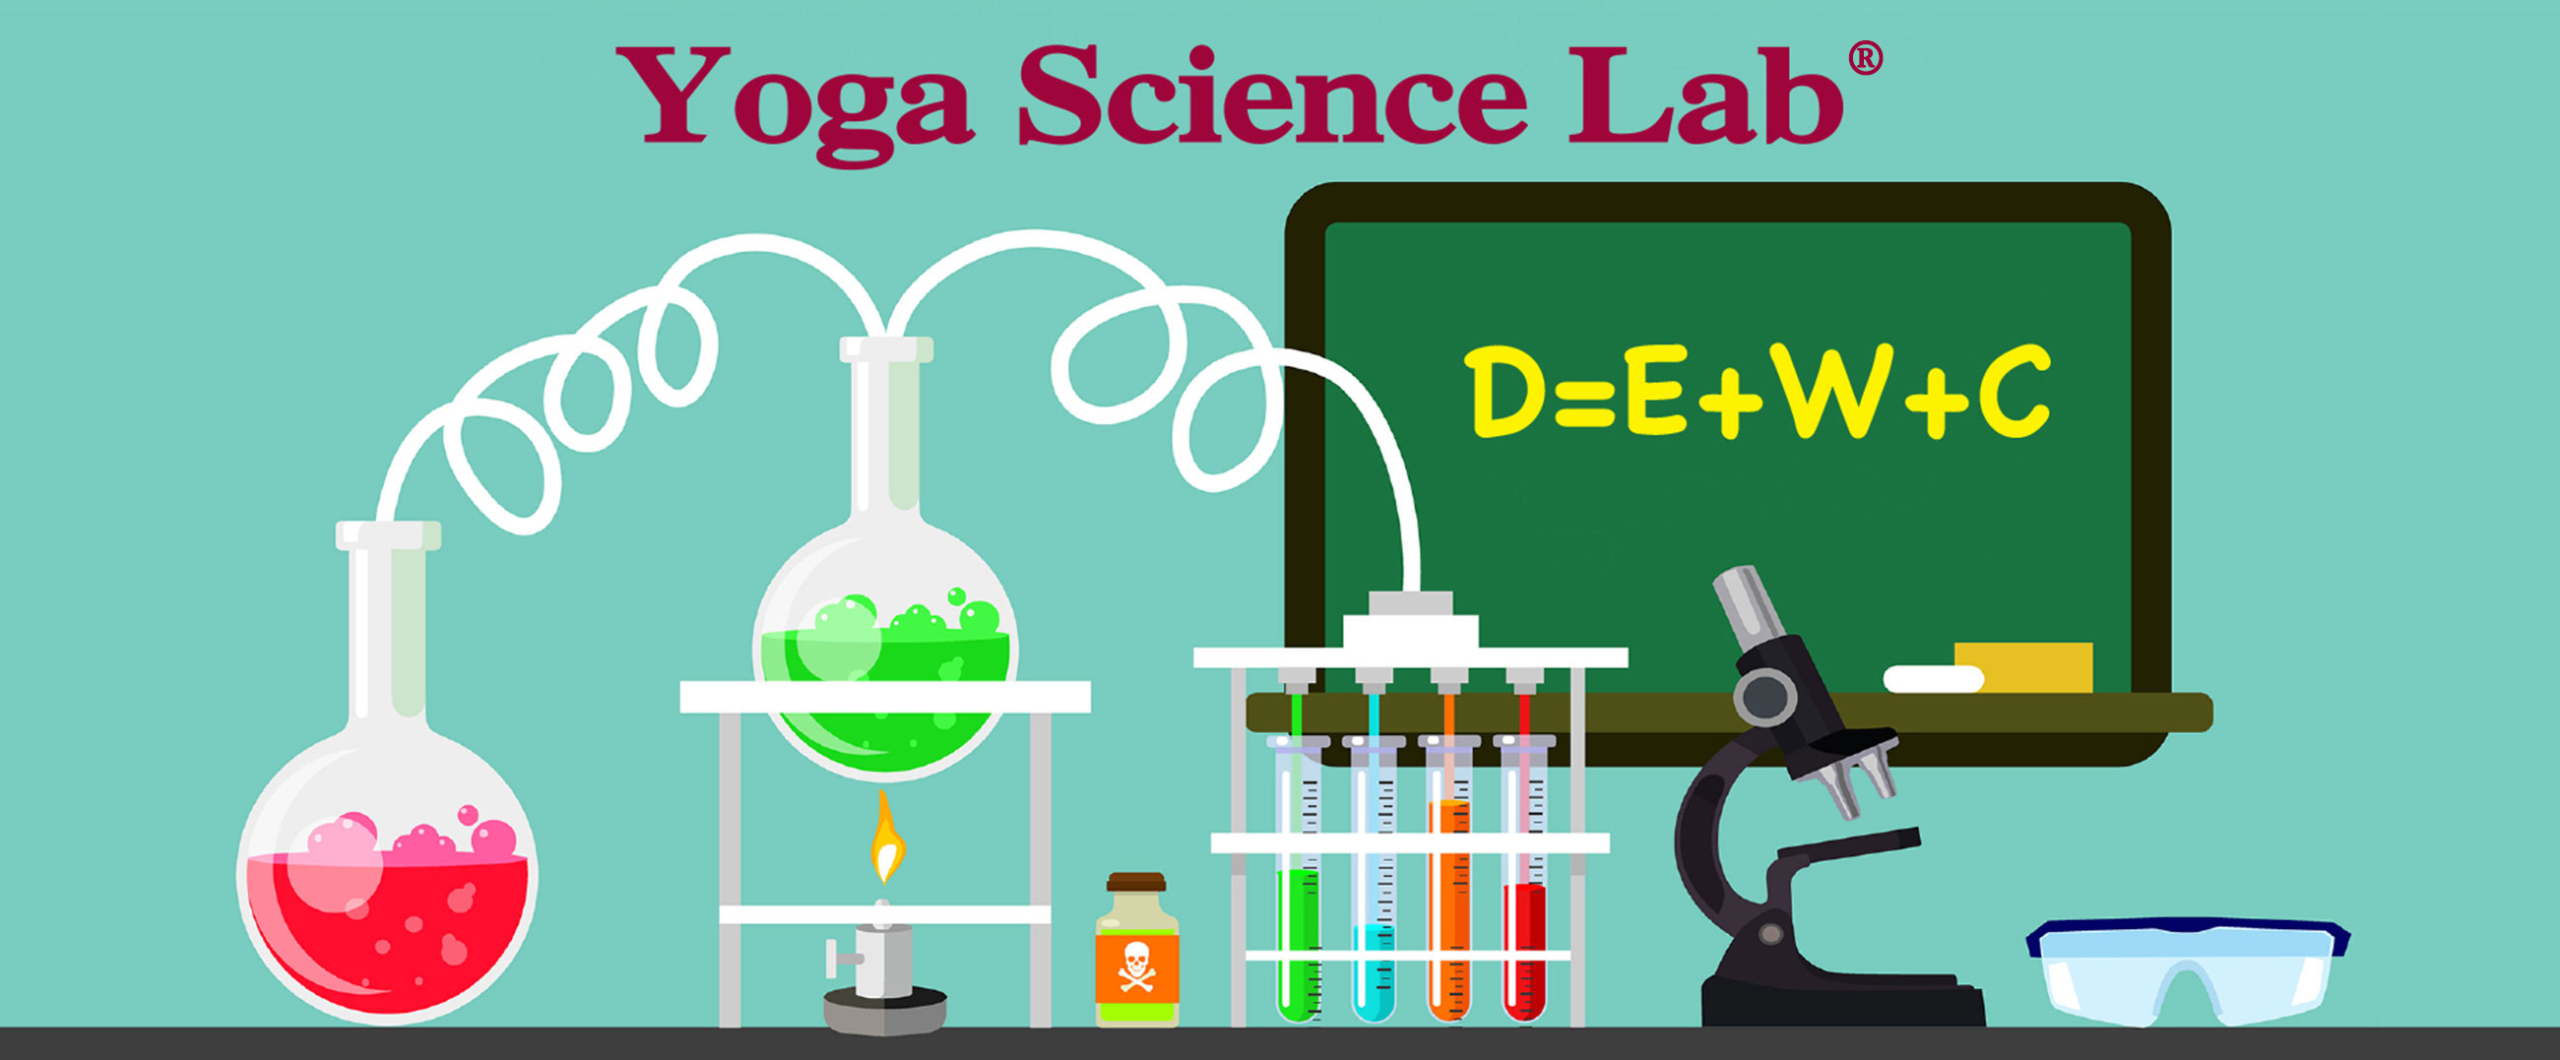 Yoga Science Lab main